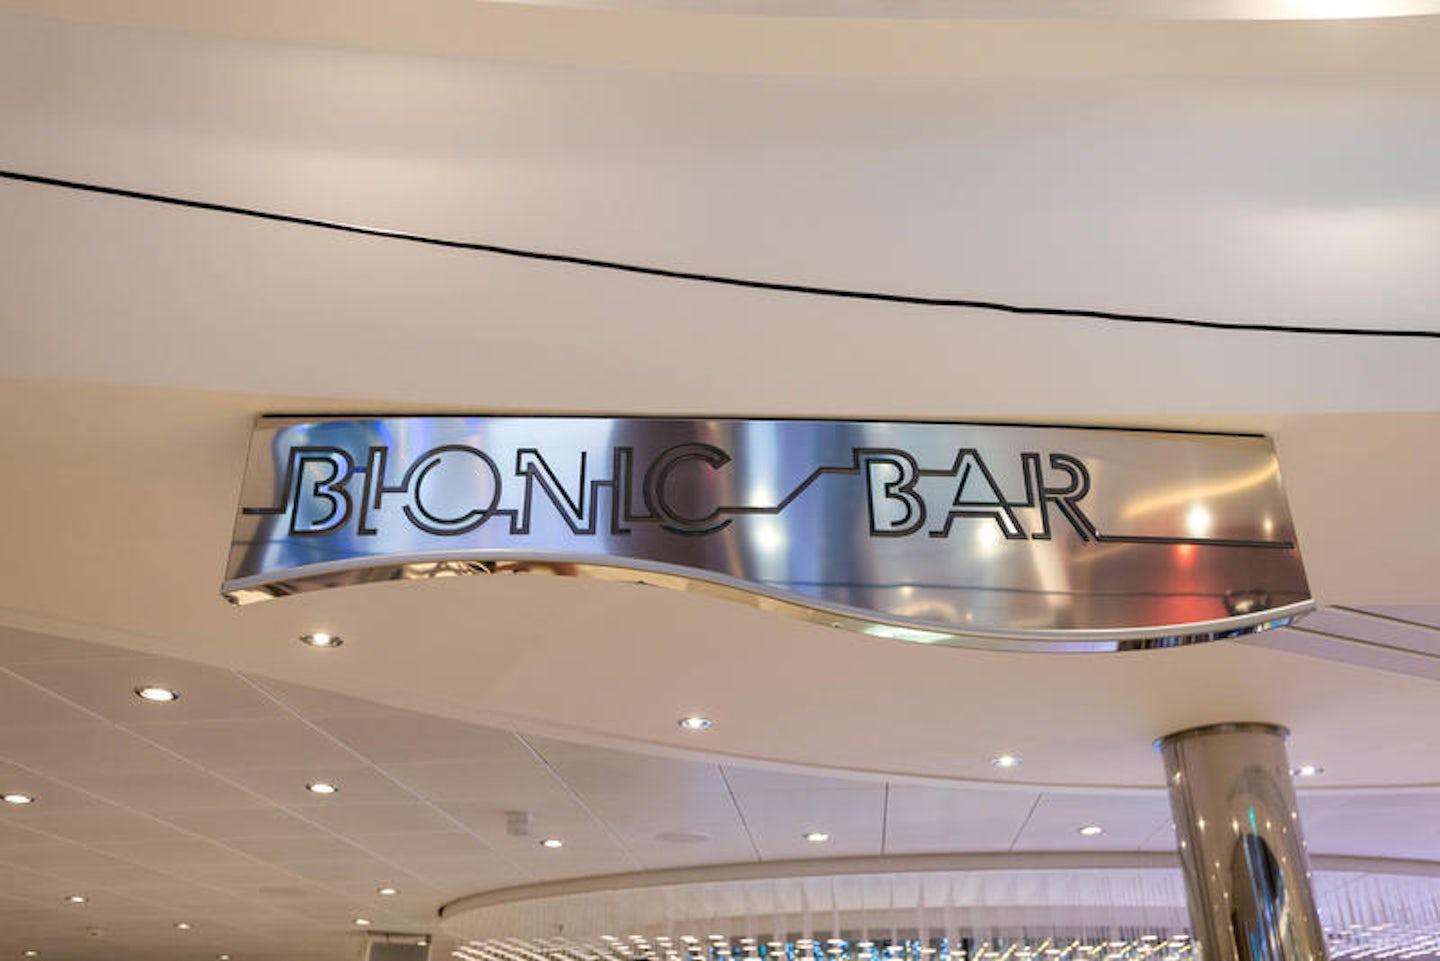 Bionic Bar on Symphony of the Seas